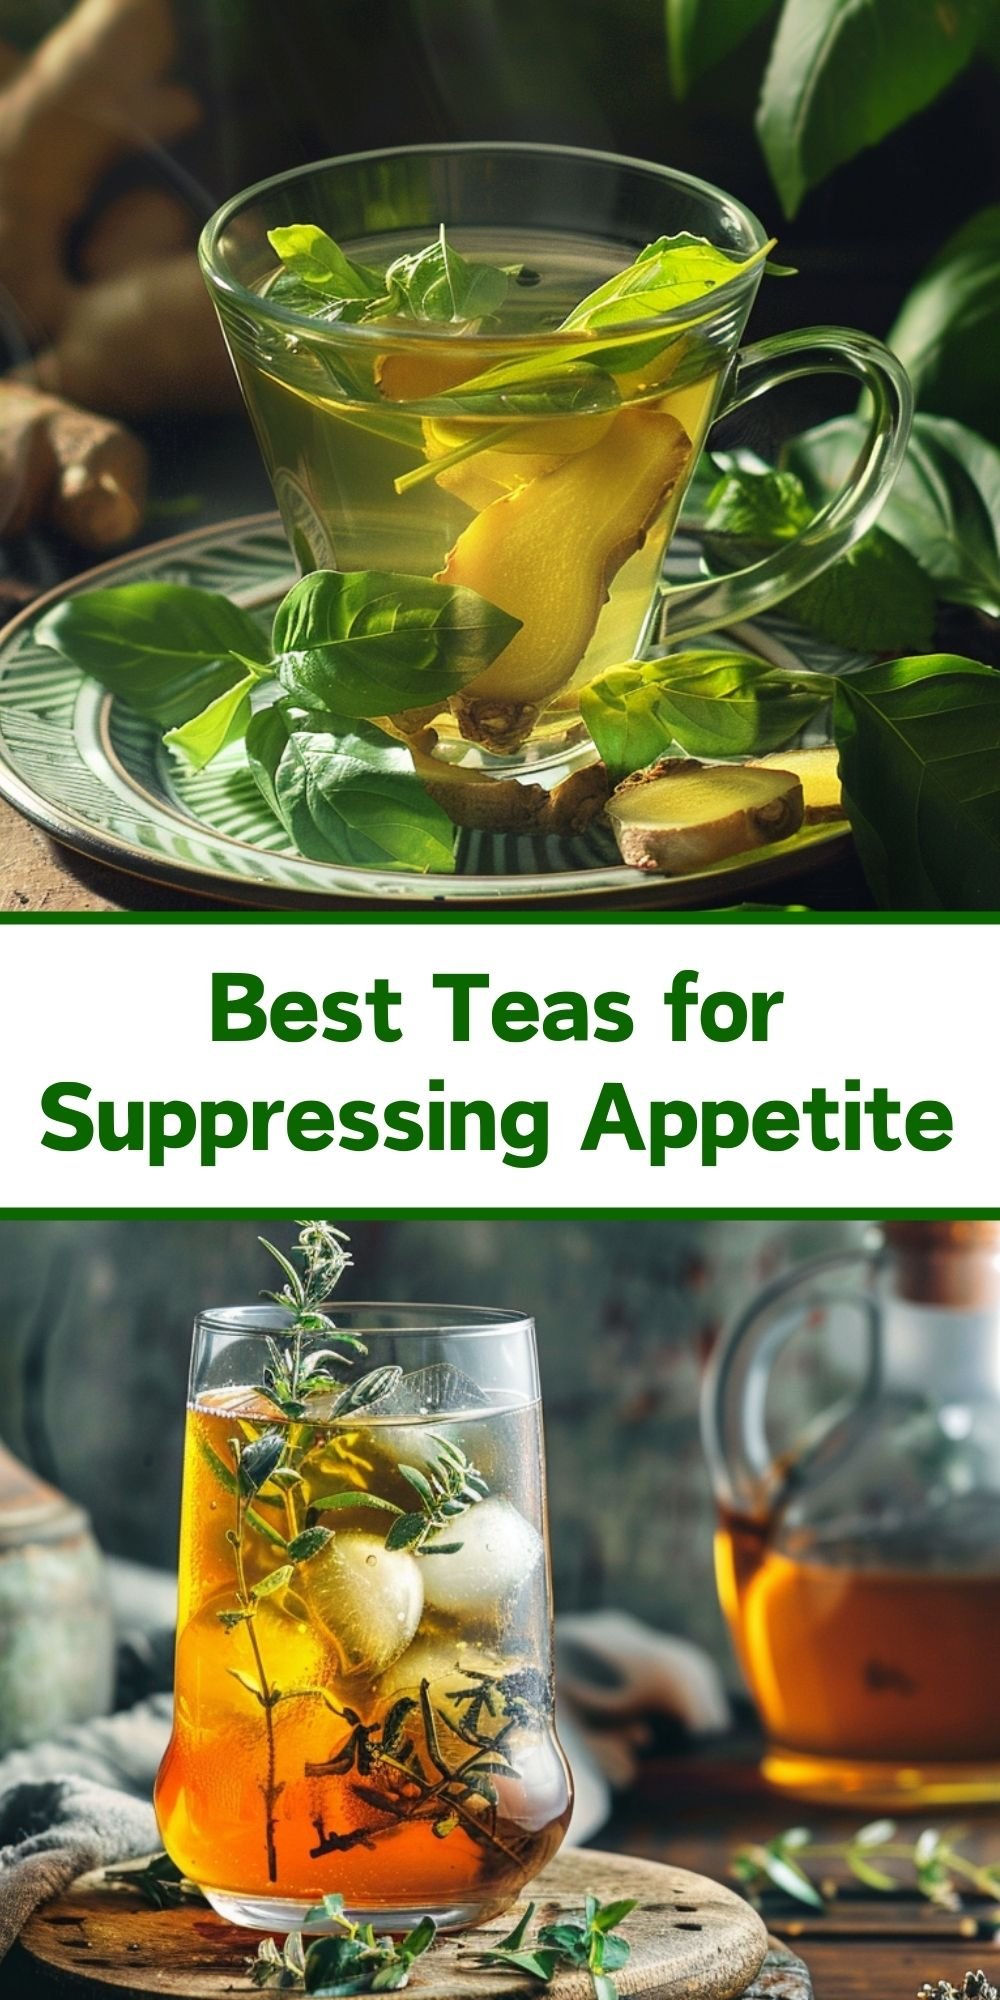 Teas for Suppressing Appetite